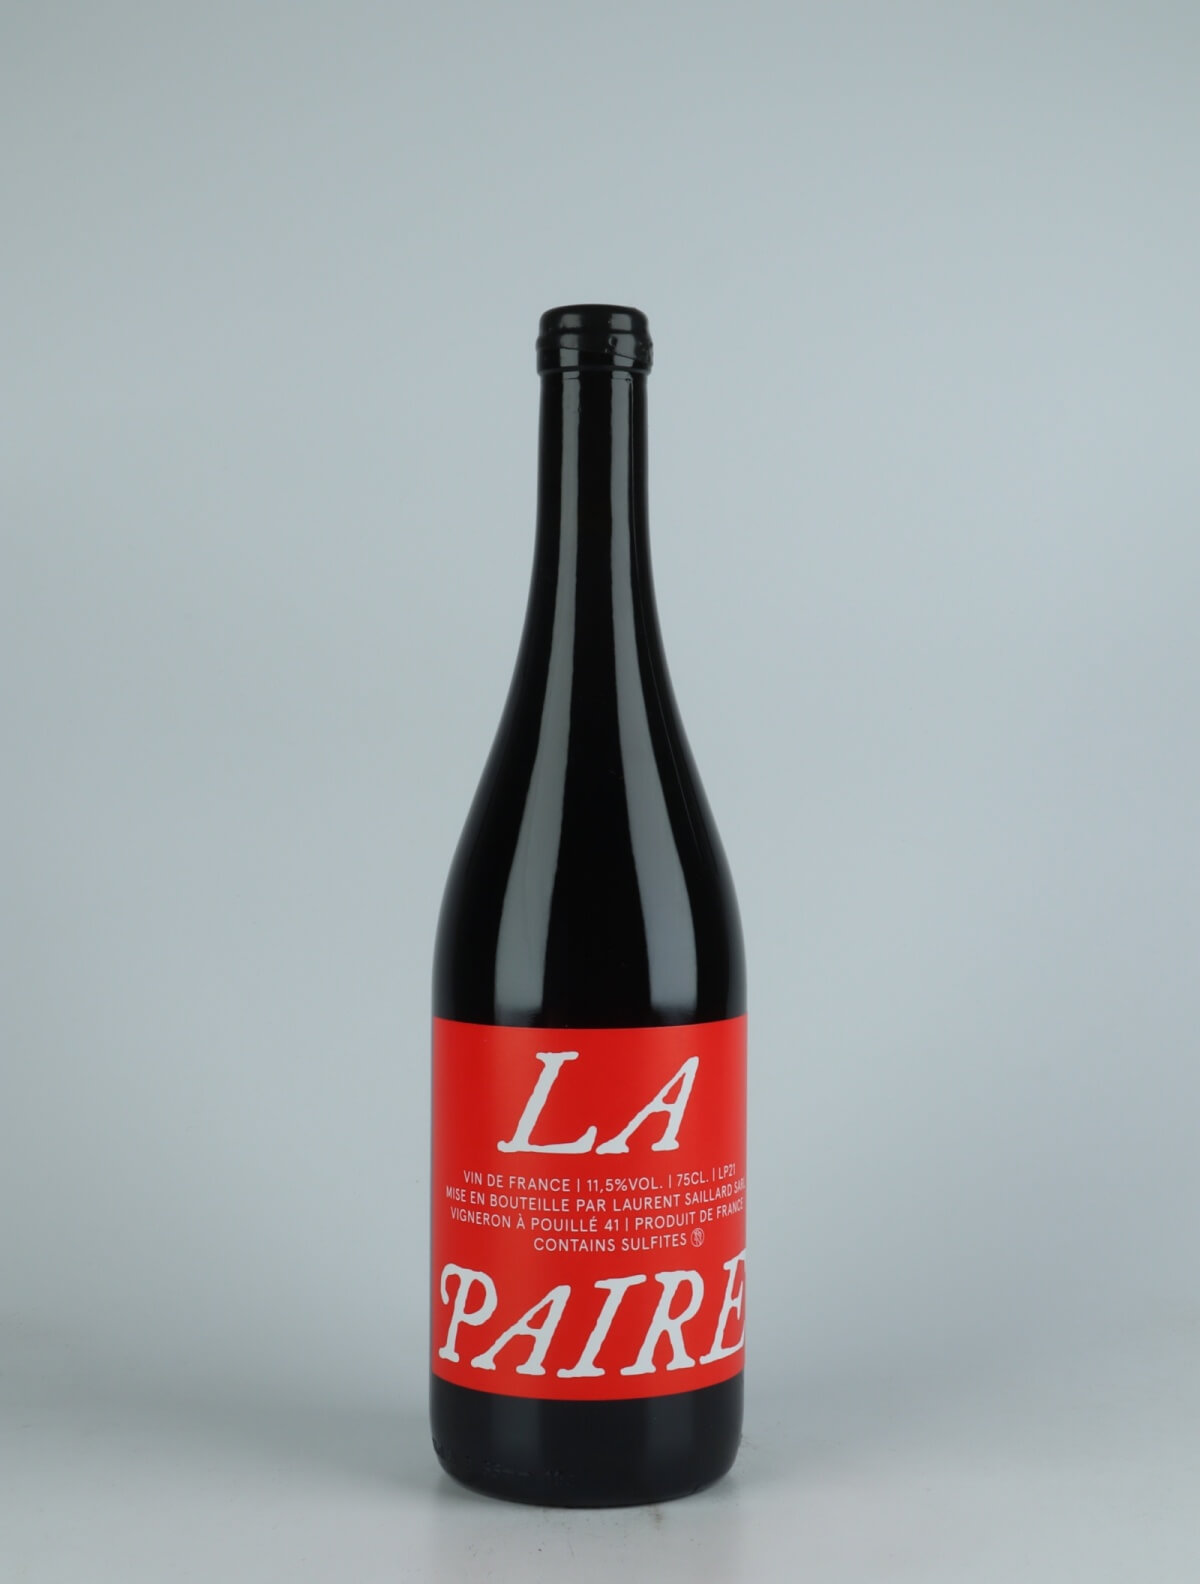 A bottle 2021 La Paire Red wine from Laurent Saillard, Loire in France